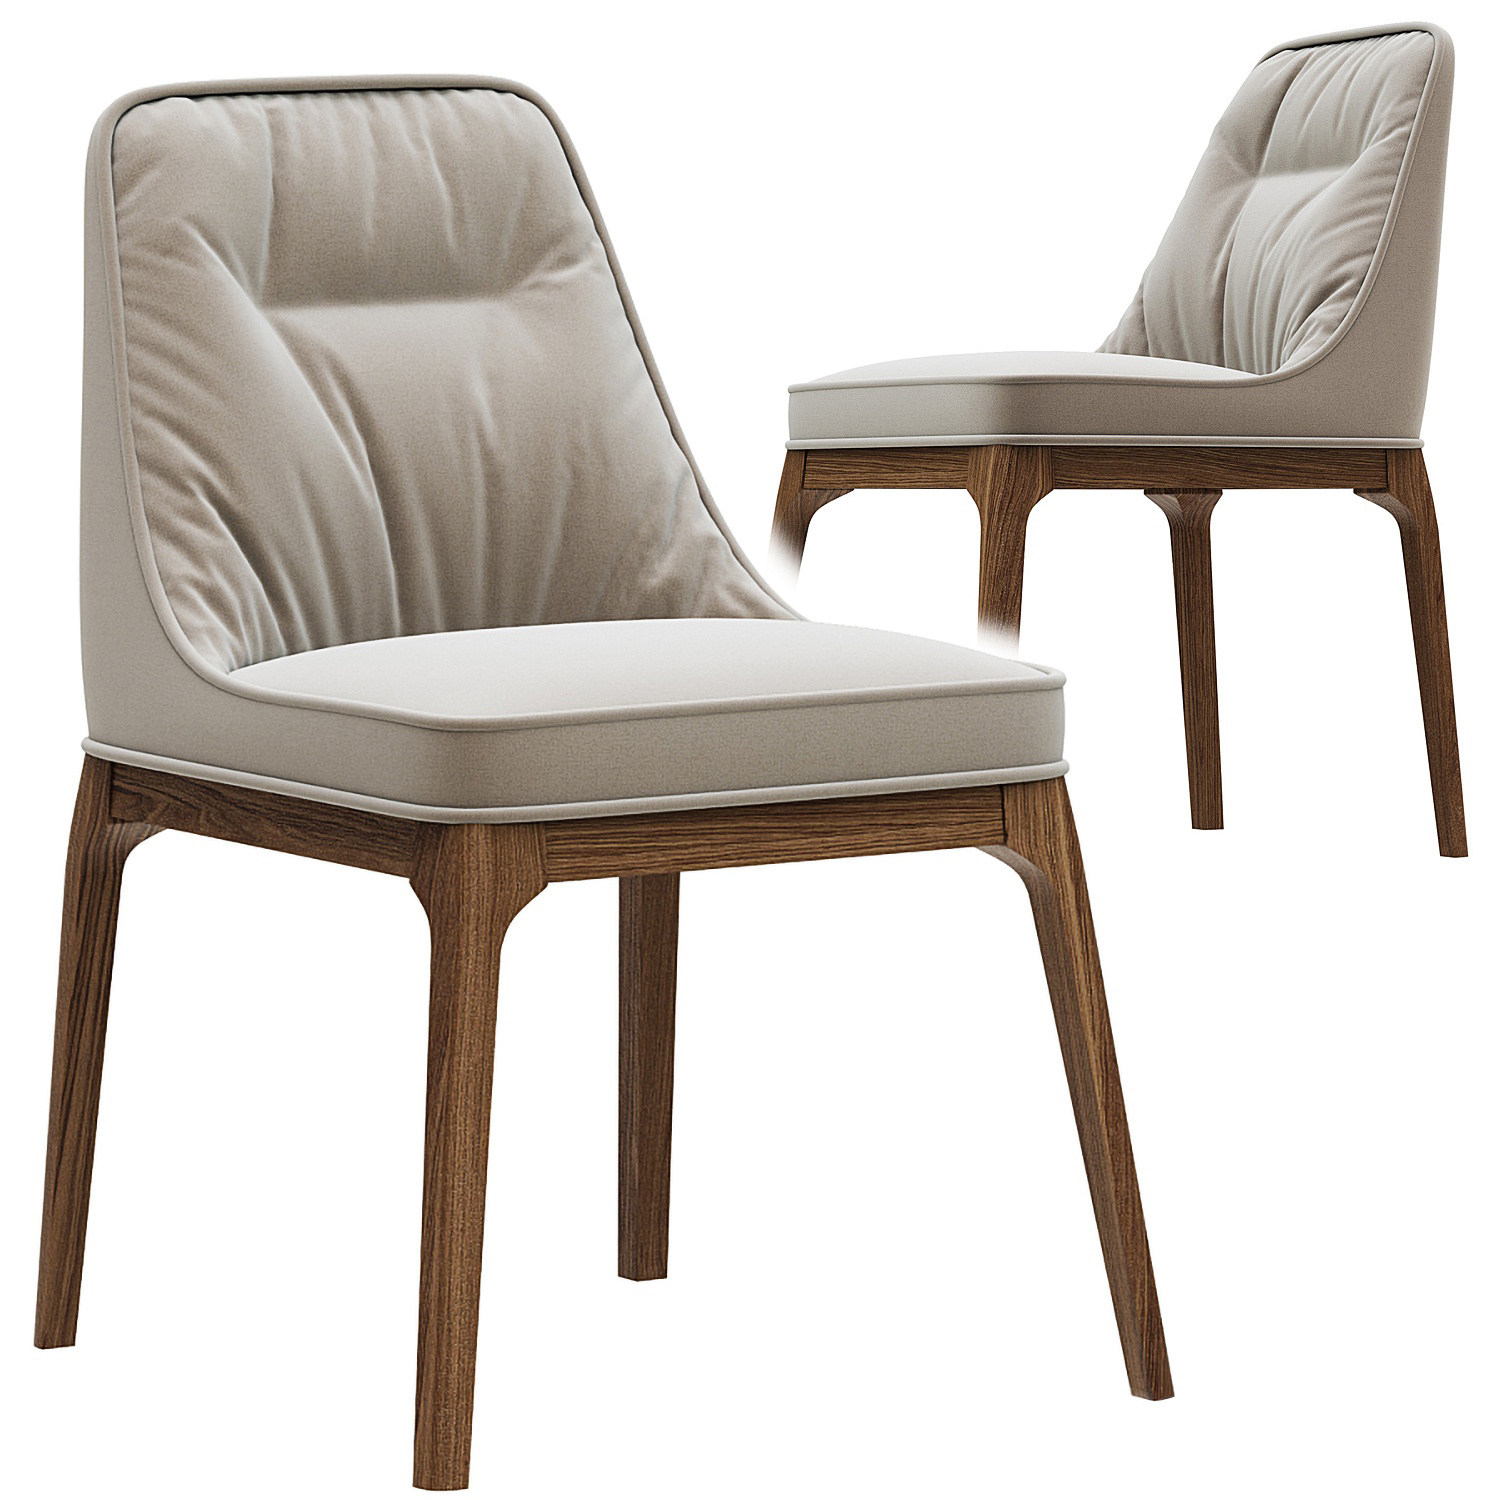 06Dantone Home 现代布艺餐椅,椅子,单椅 (1)3d模型下载